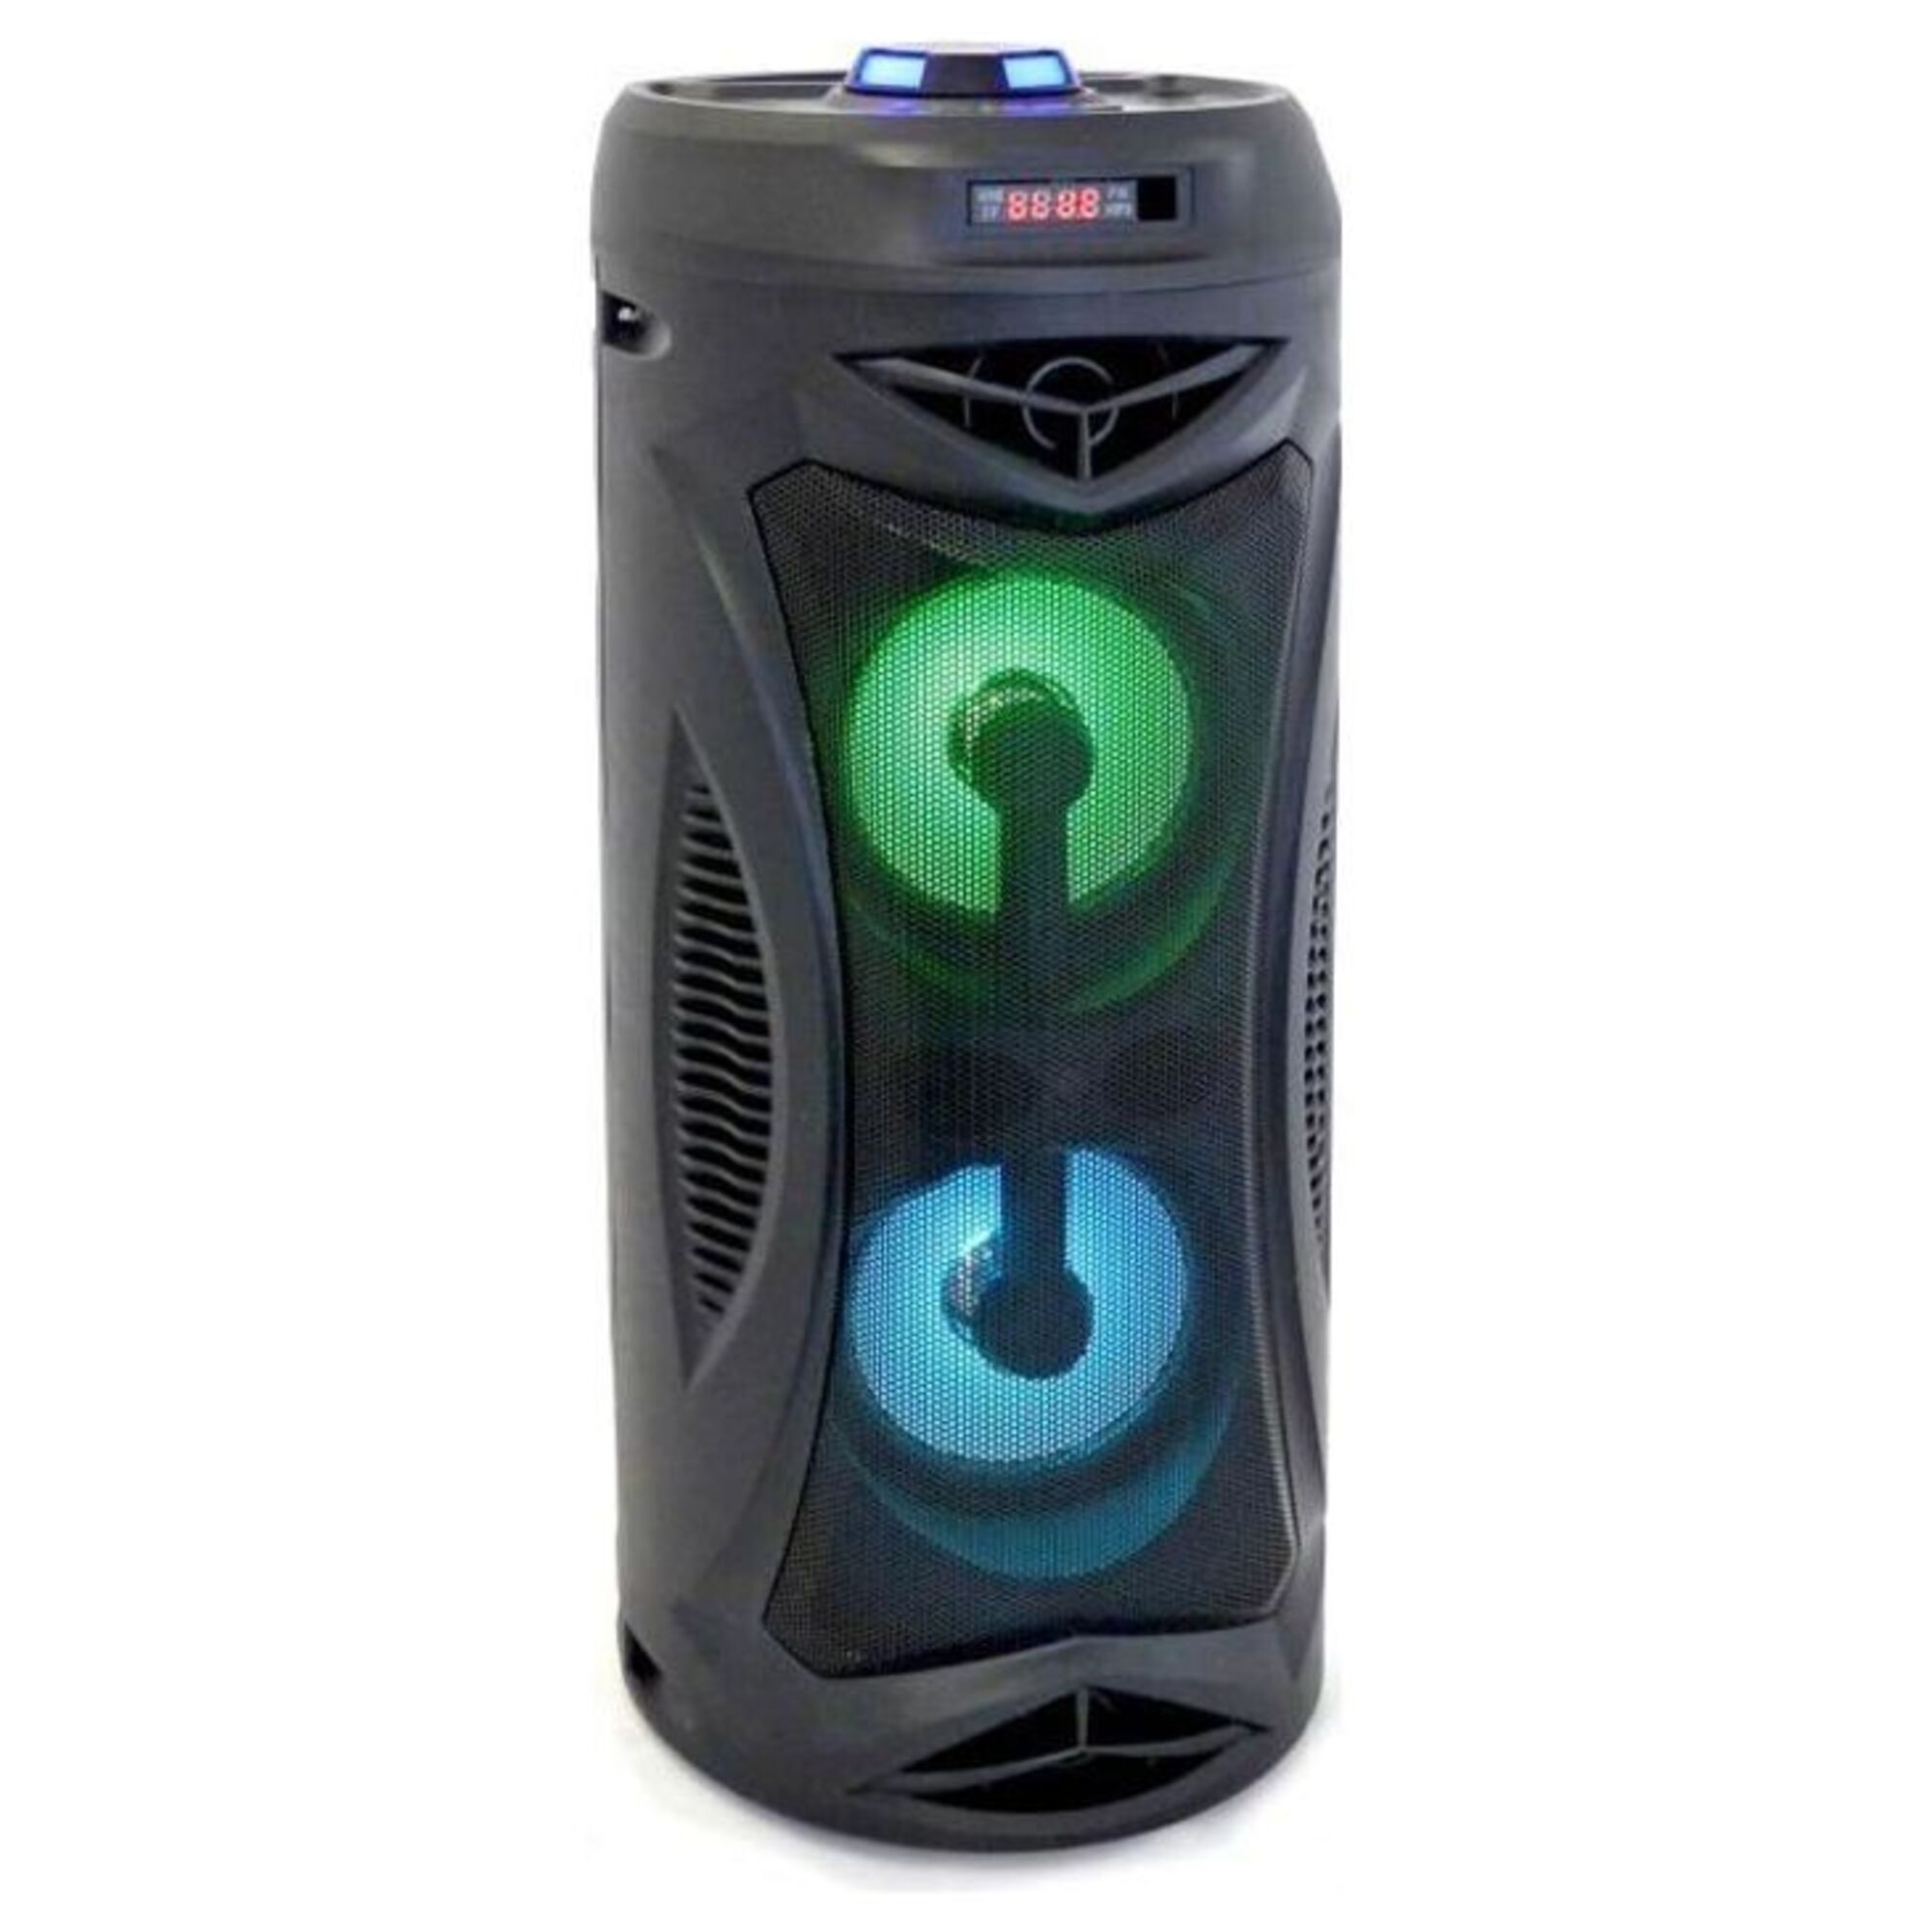 INOVALLEY KA02- Enceinte lumineuse Bluetooth 400W - Fonction Karaoké - 2 Haut-parleurs - Lumieres LED synchronisées - Port USB - Neuf